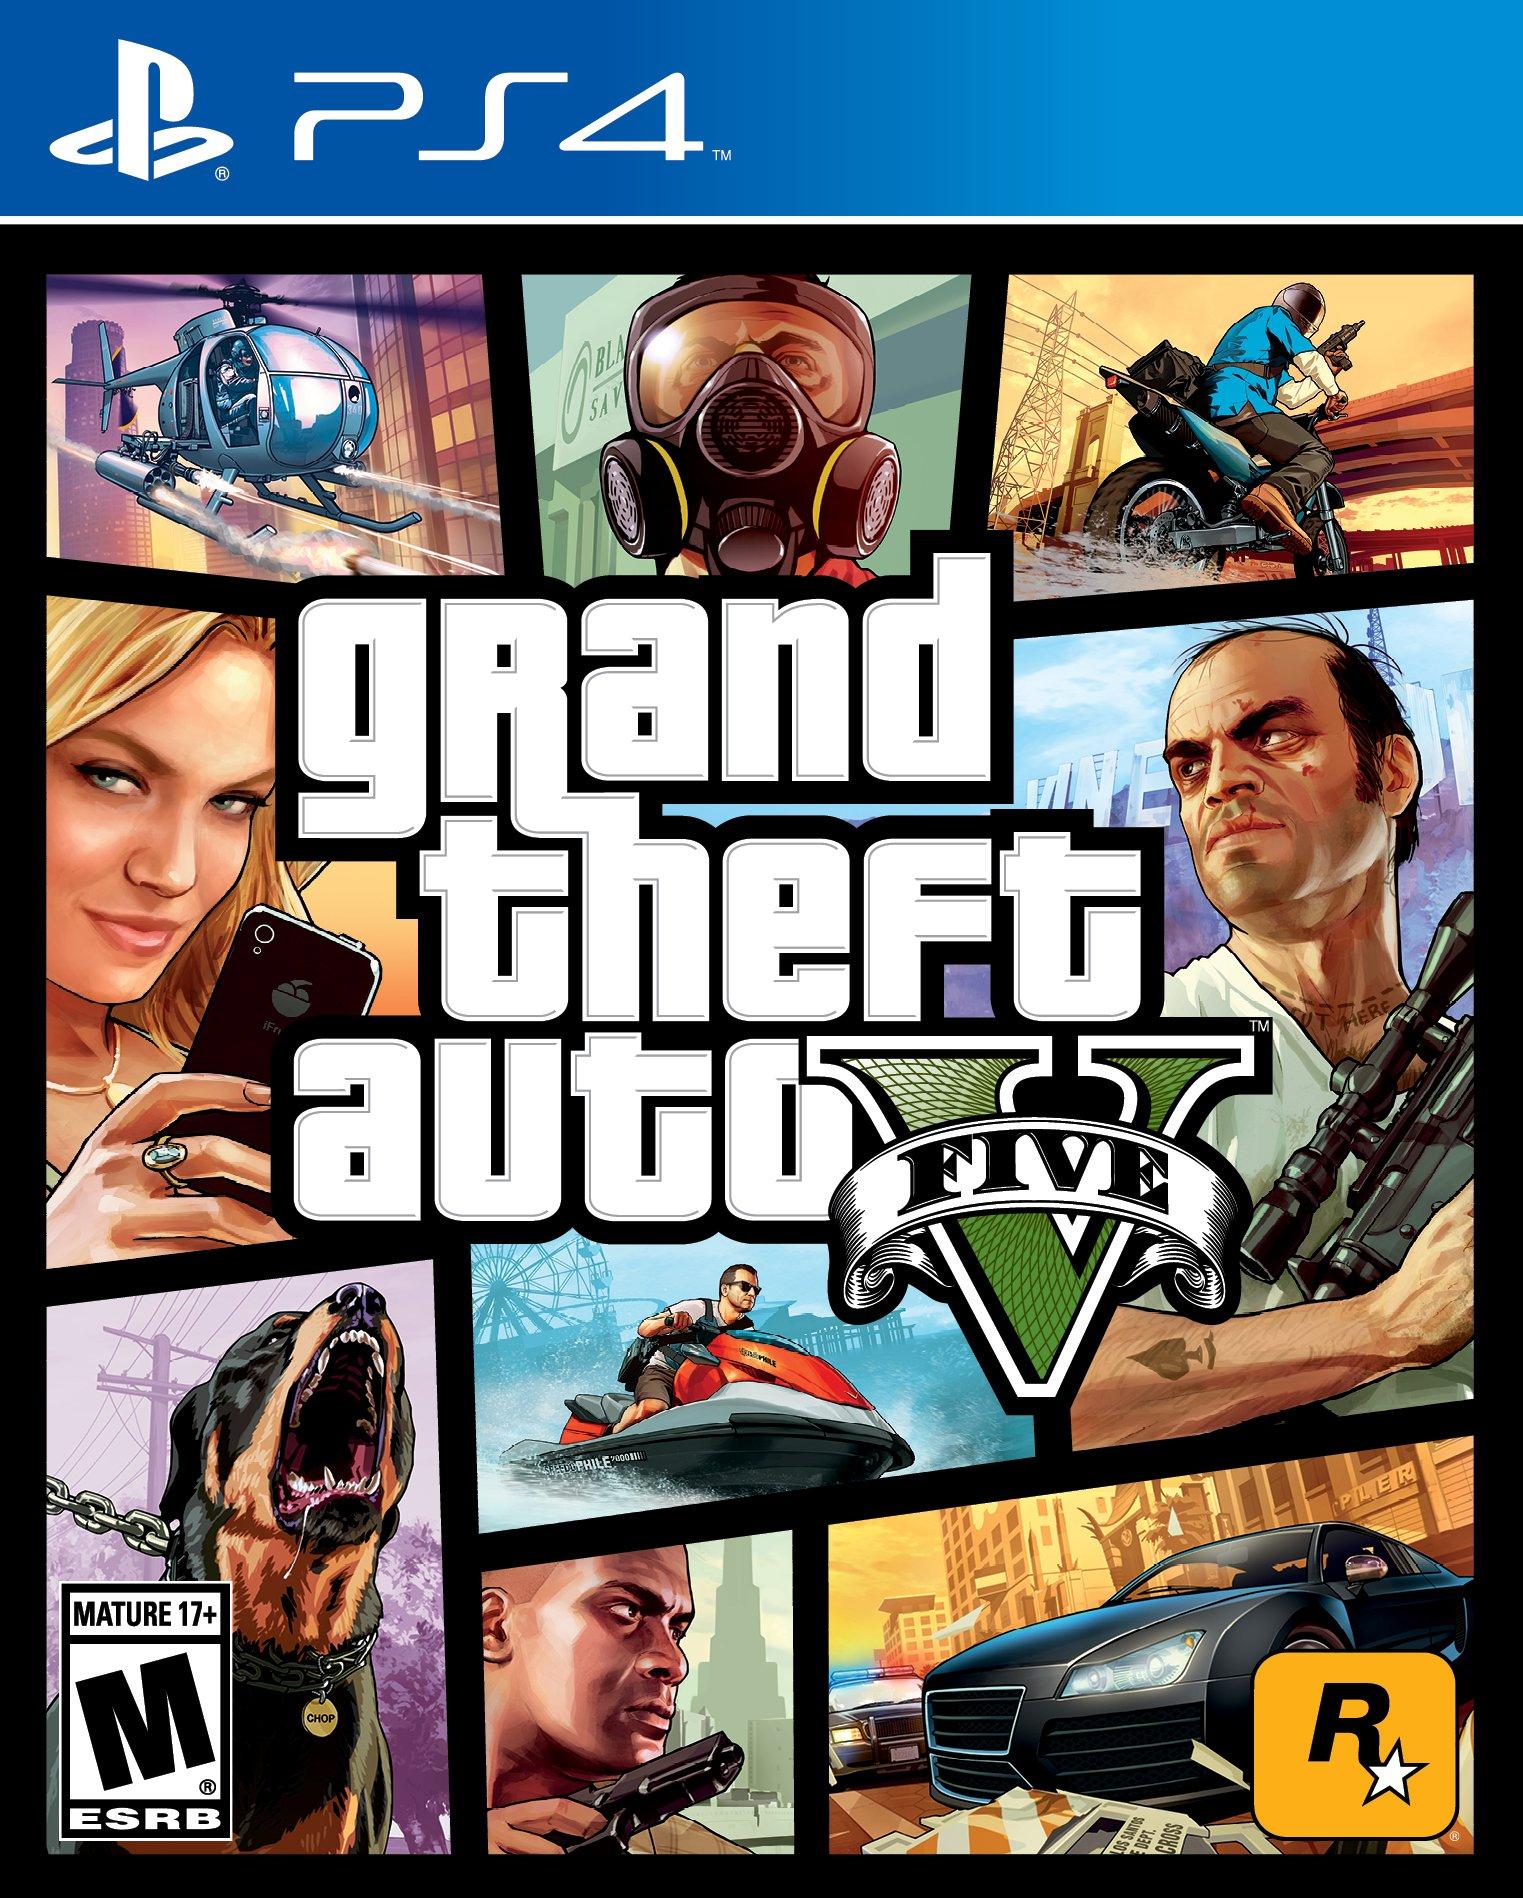 Grand Theft Auto V 5